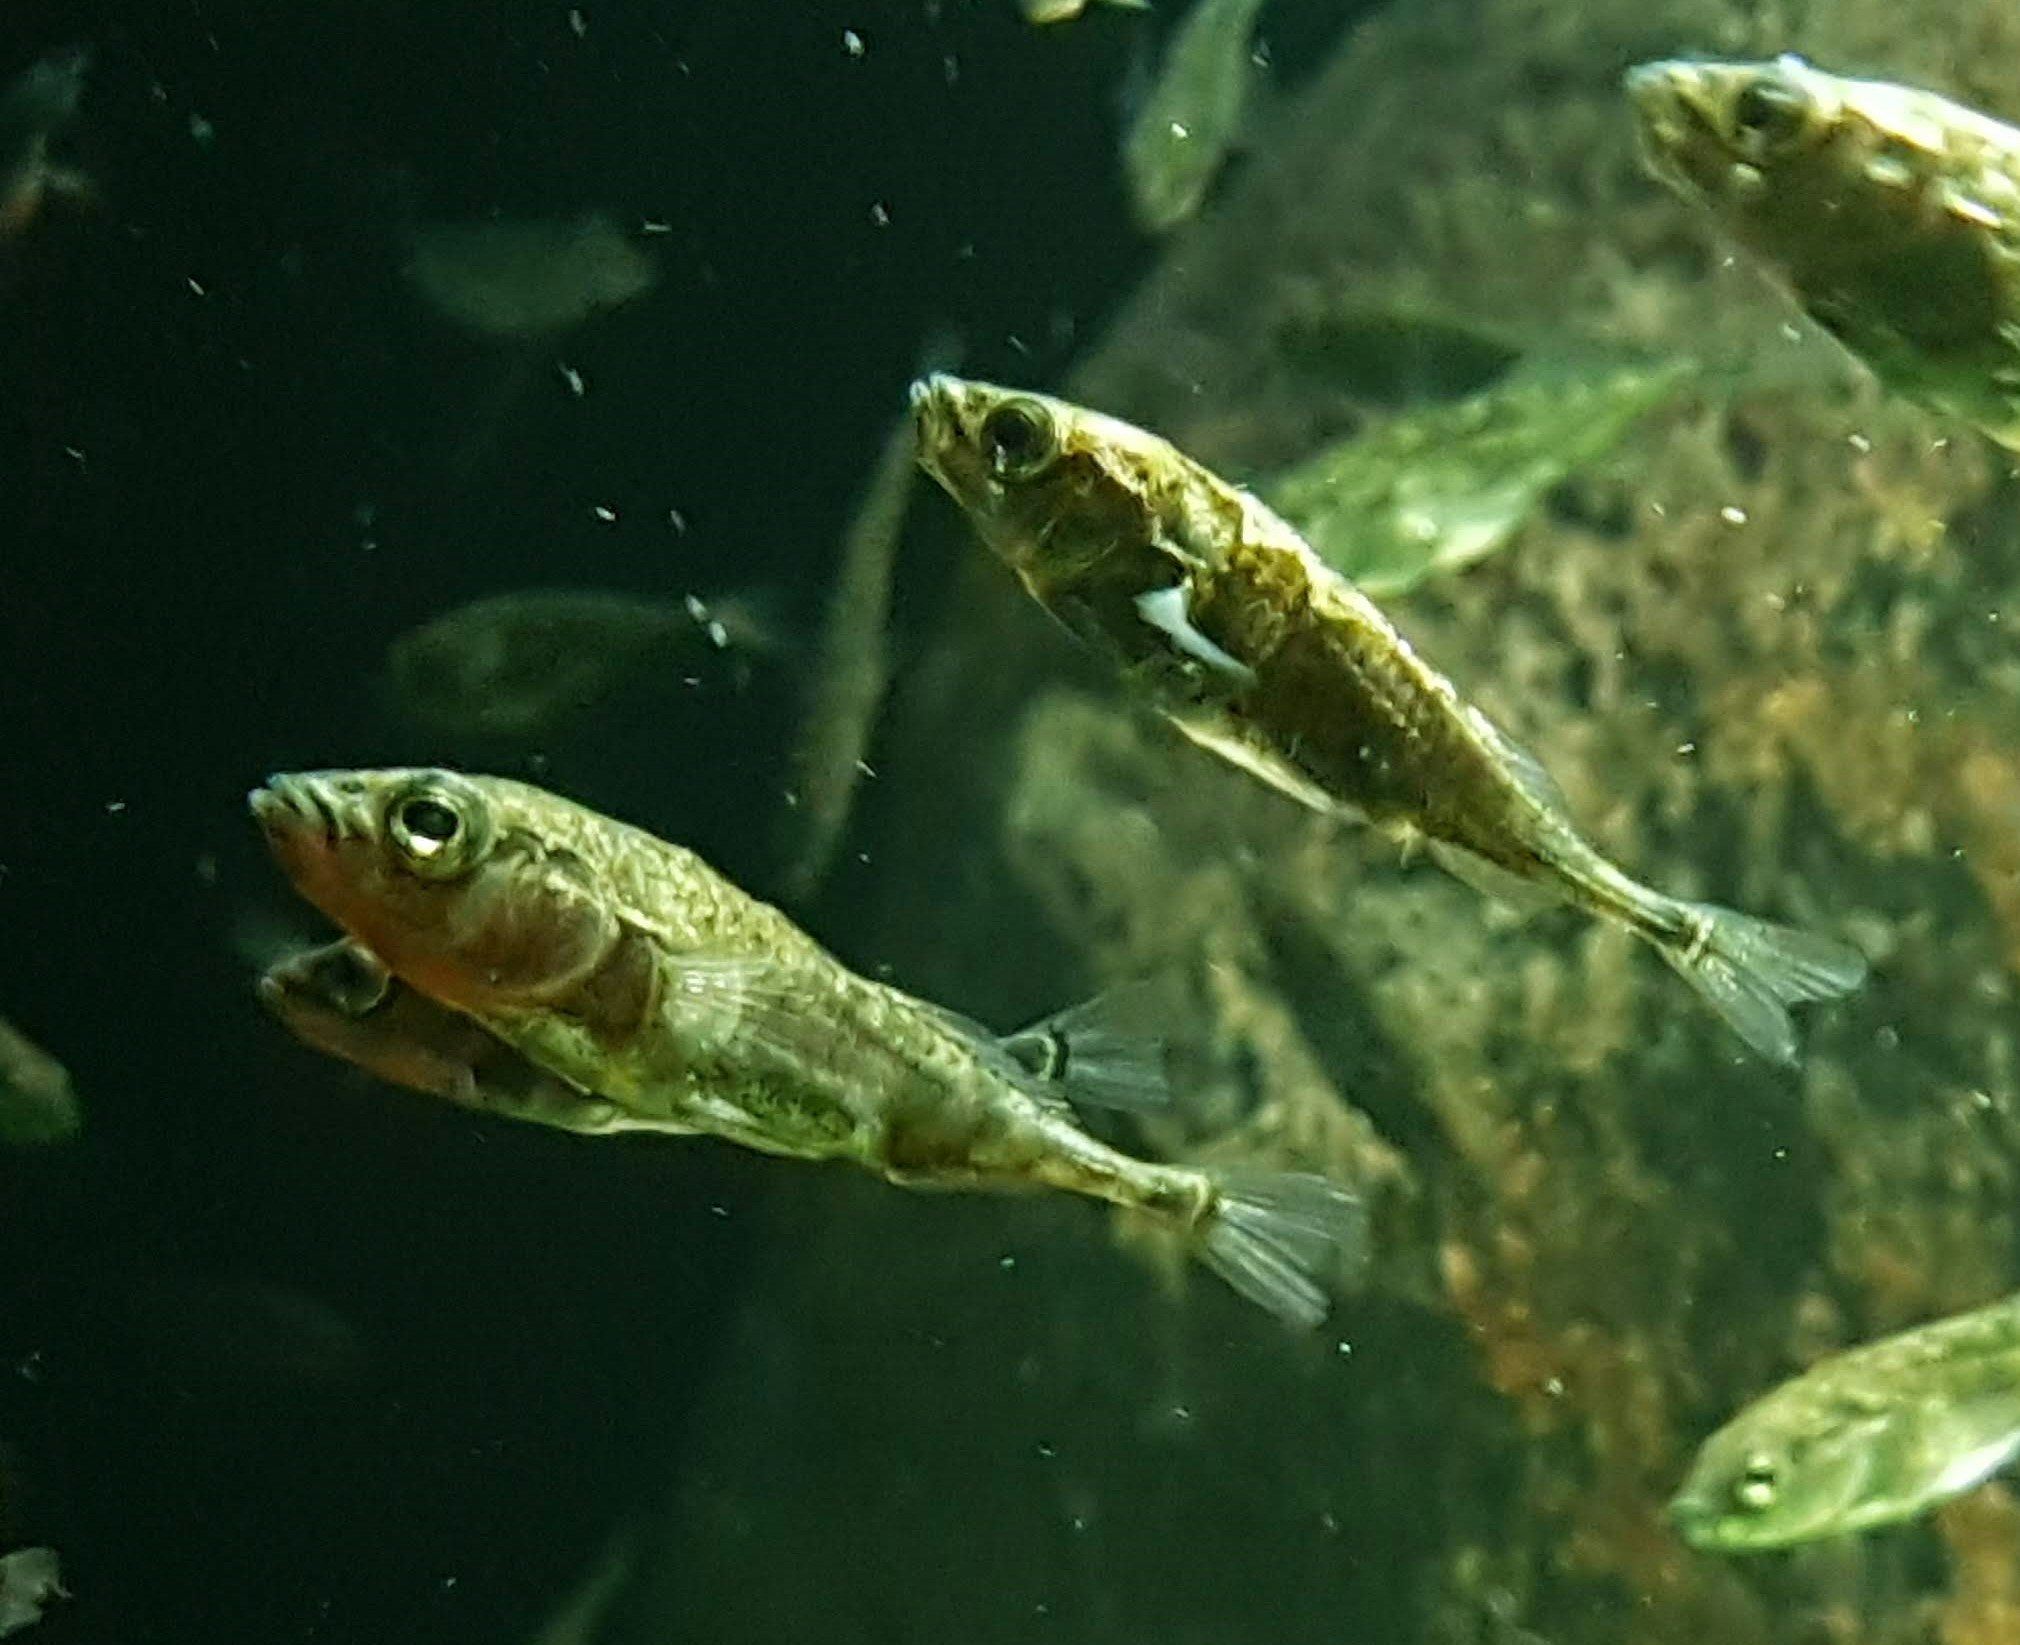 Three spined stickleback fish swimming